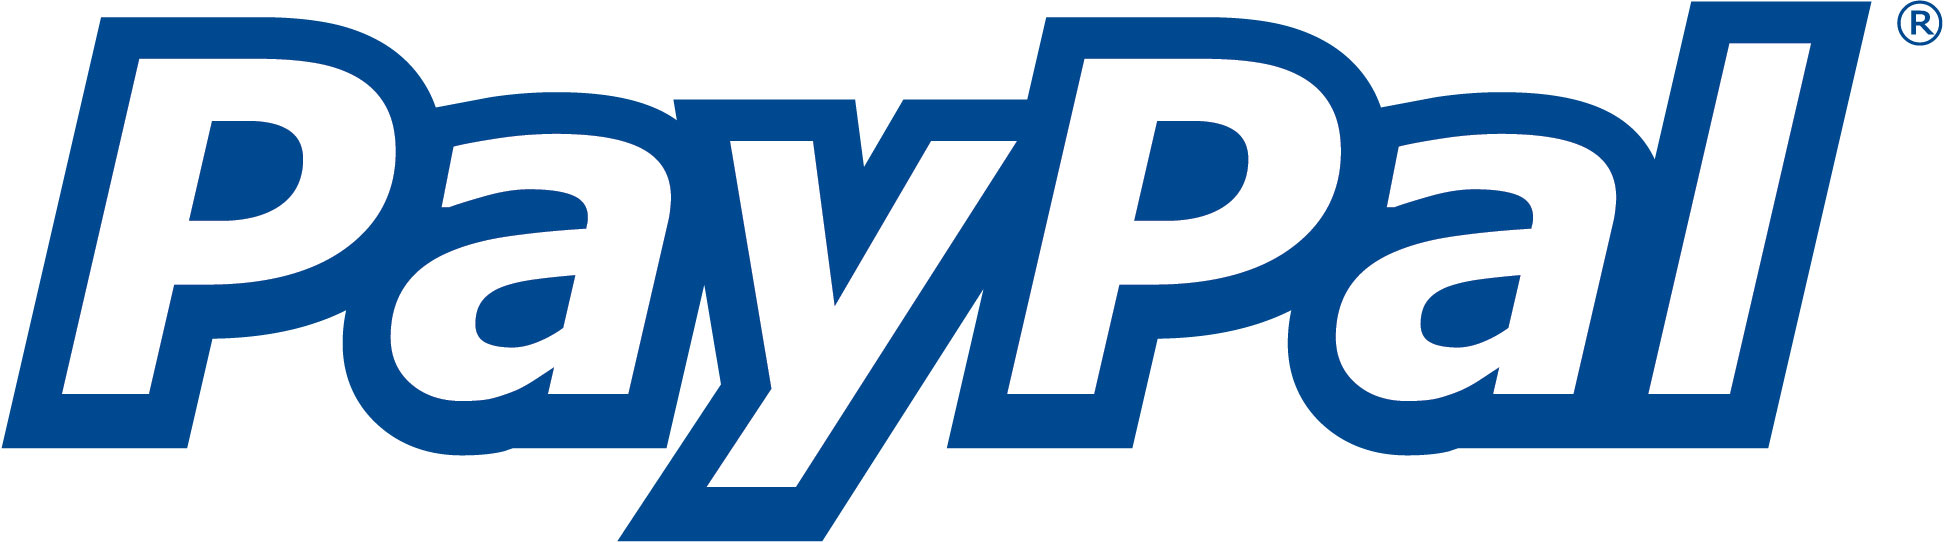 paypal logo center